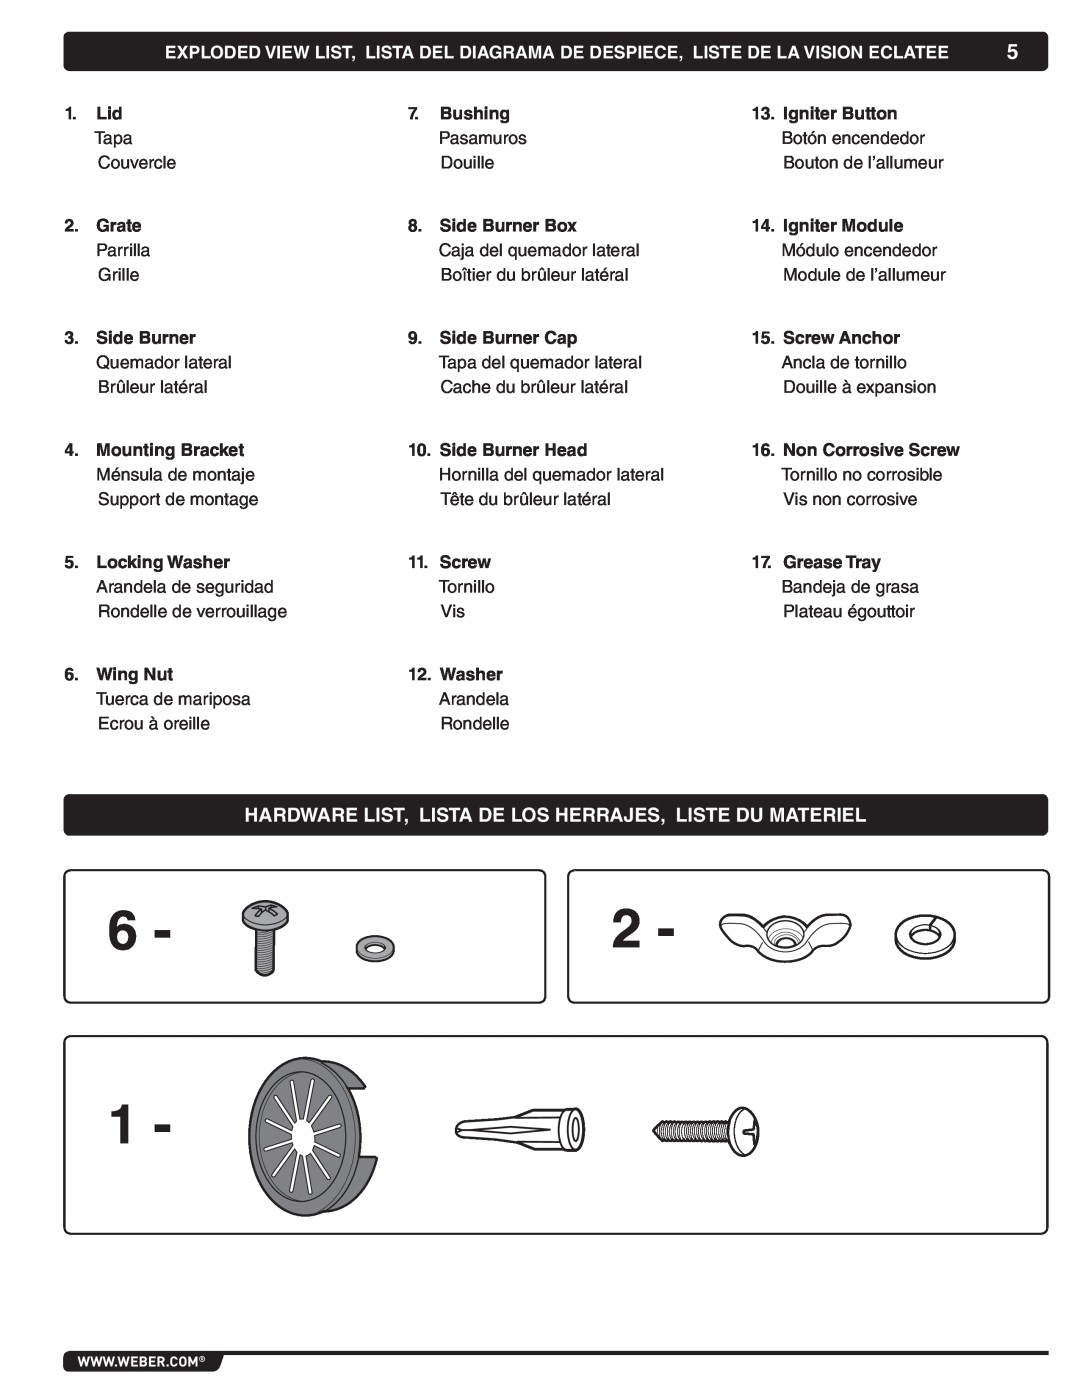 Weber 56069 manual Hardware List, Lista De Los Herrajes, Liste Du Materiel 